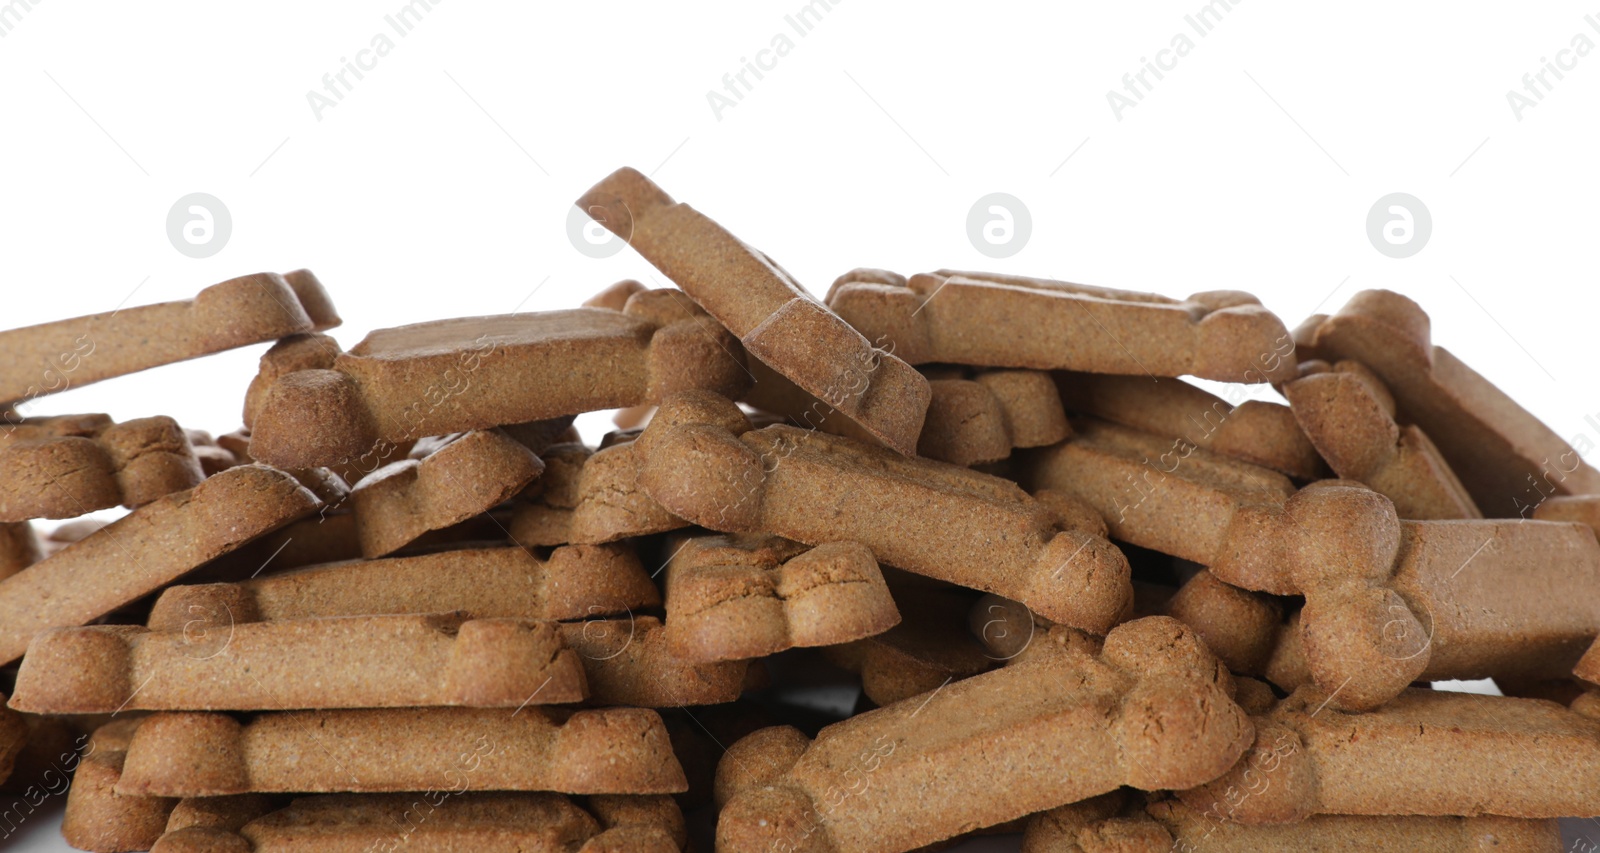 Photo of Pile of bone shaped dog cookies on white background, closeup